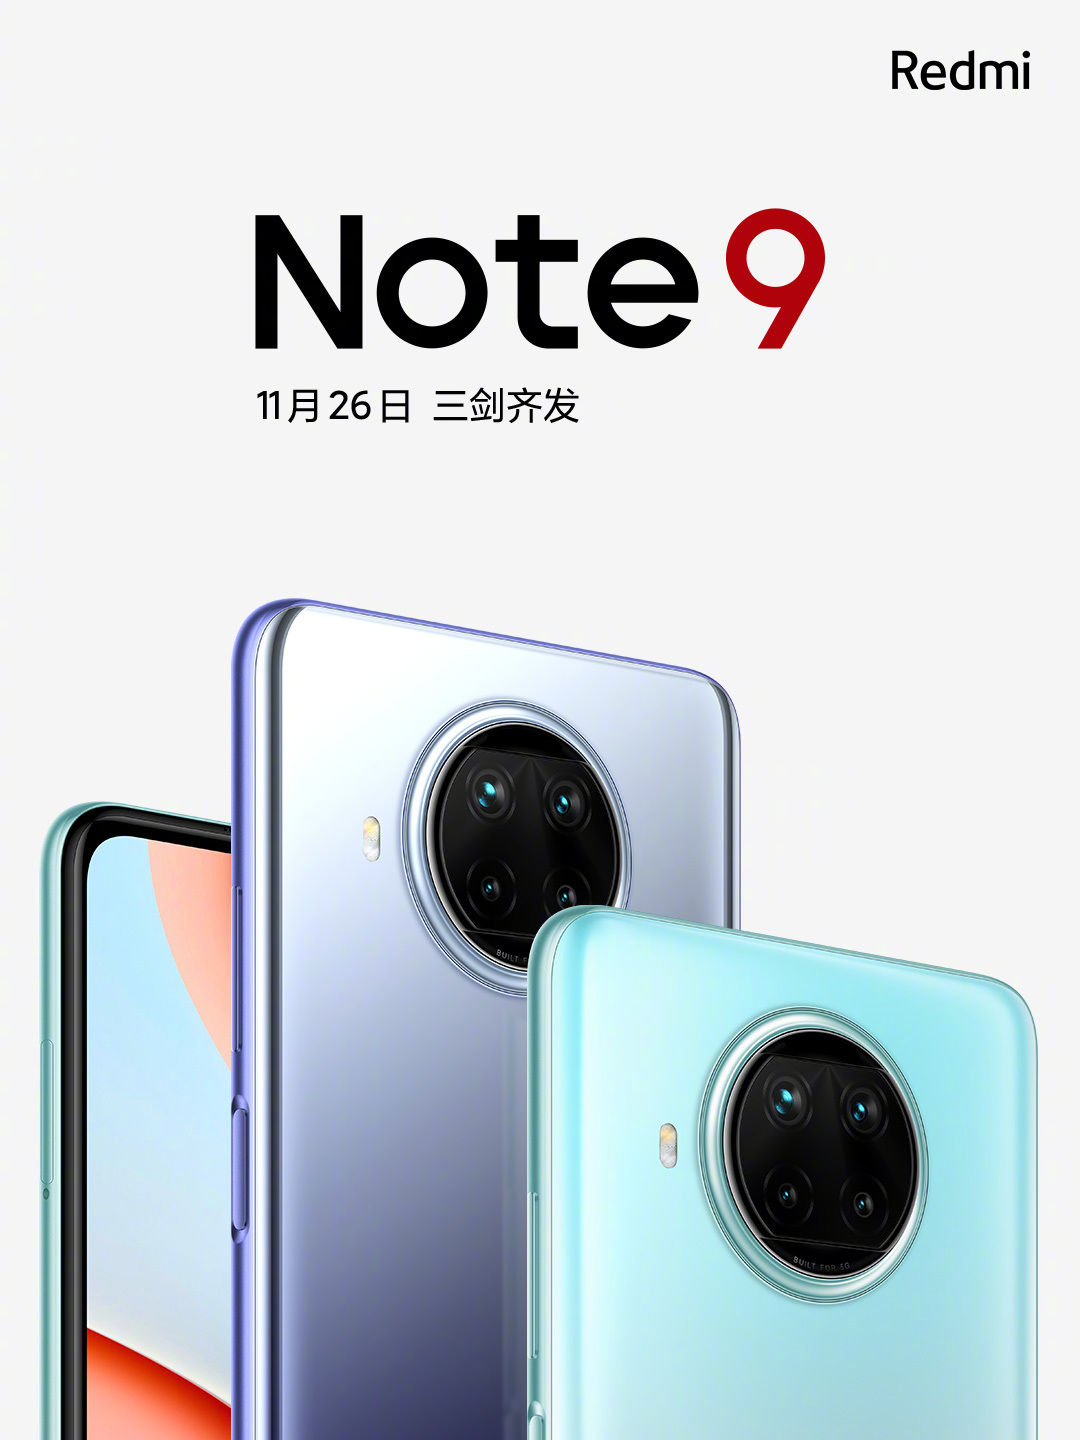 Redmi Note 9 series china launch